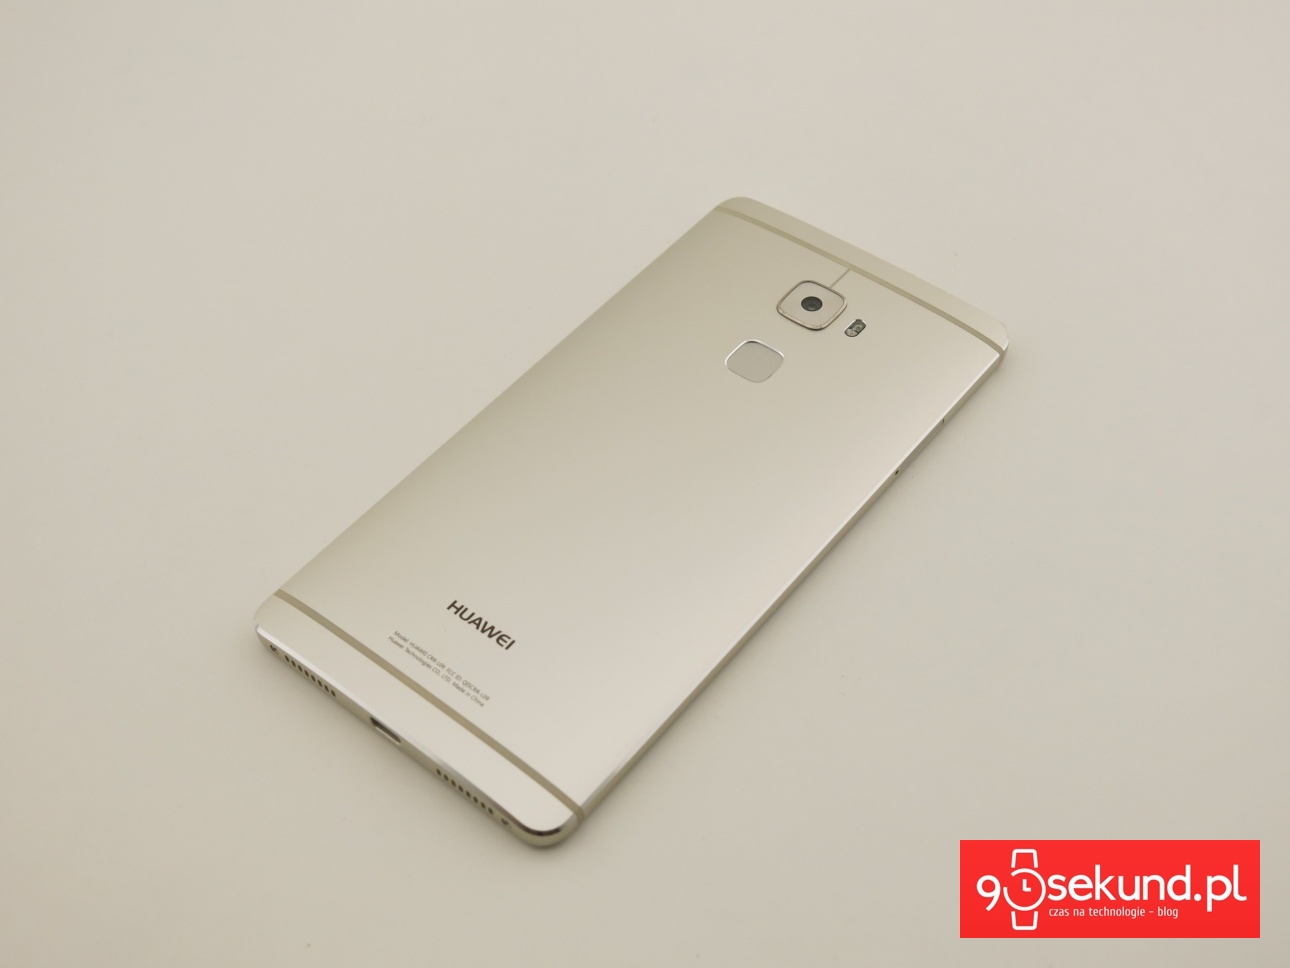 Huawei Mate S (CRR-L09) - recenzja 90sekund.pl